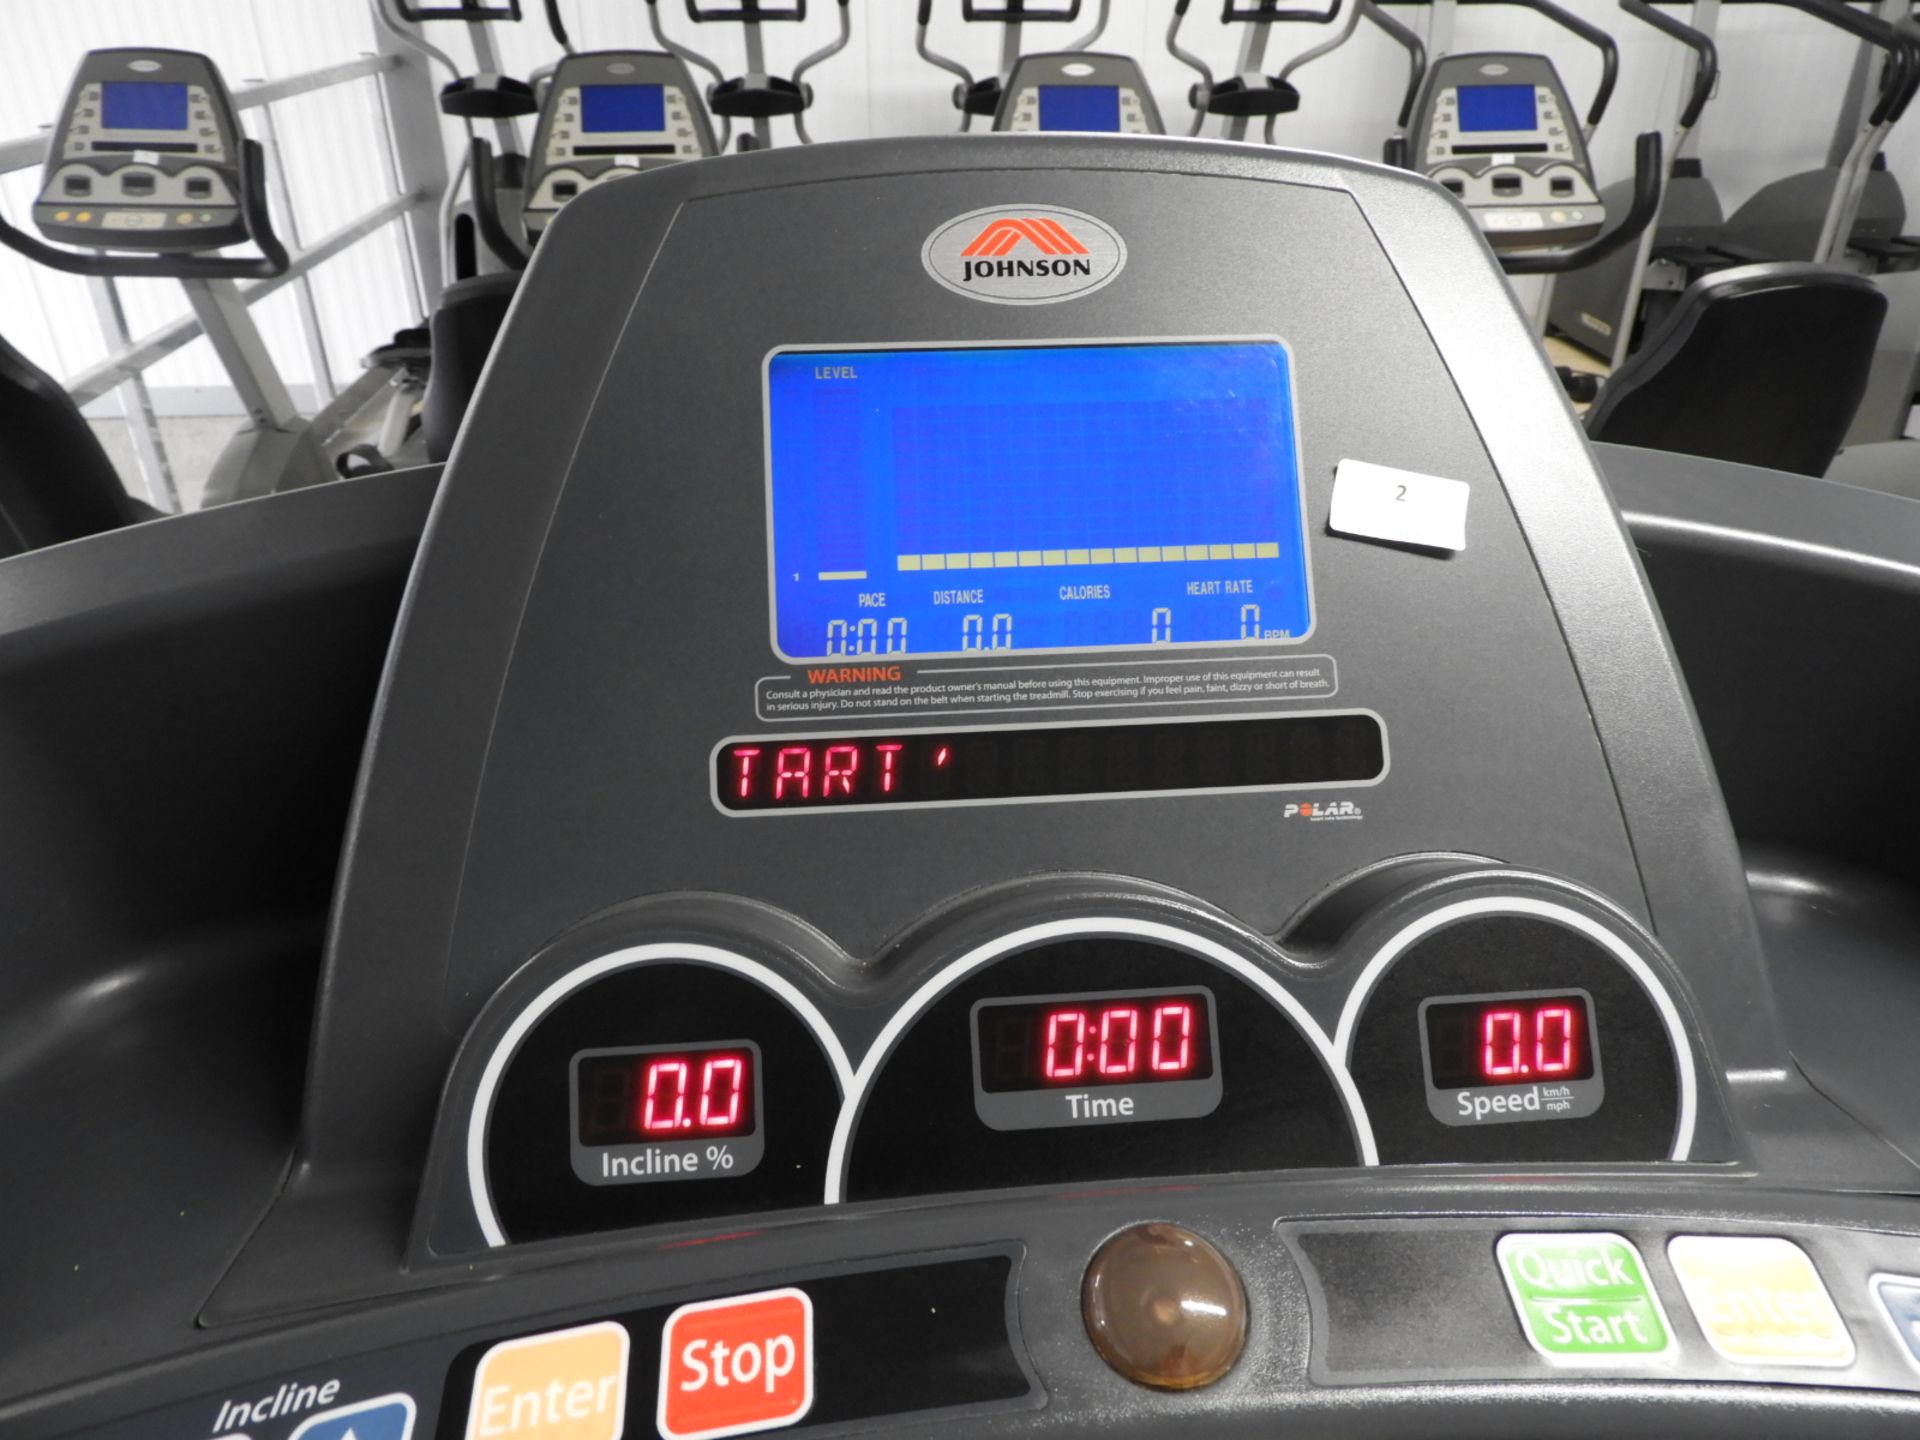 *Johnson T8000 Treadmill - Image 2 of 2